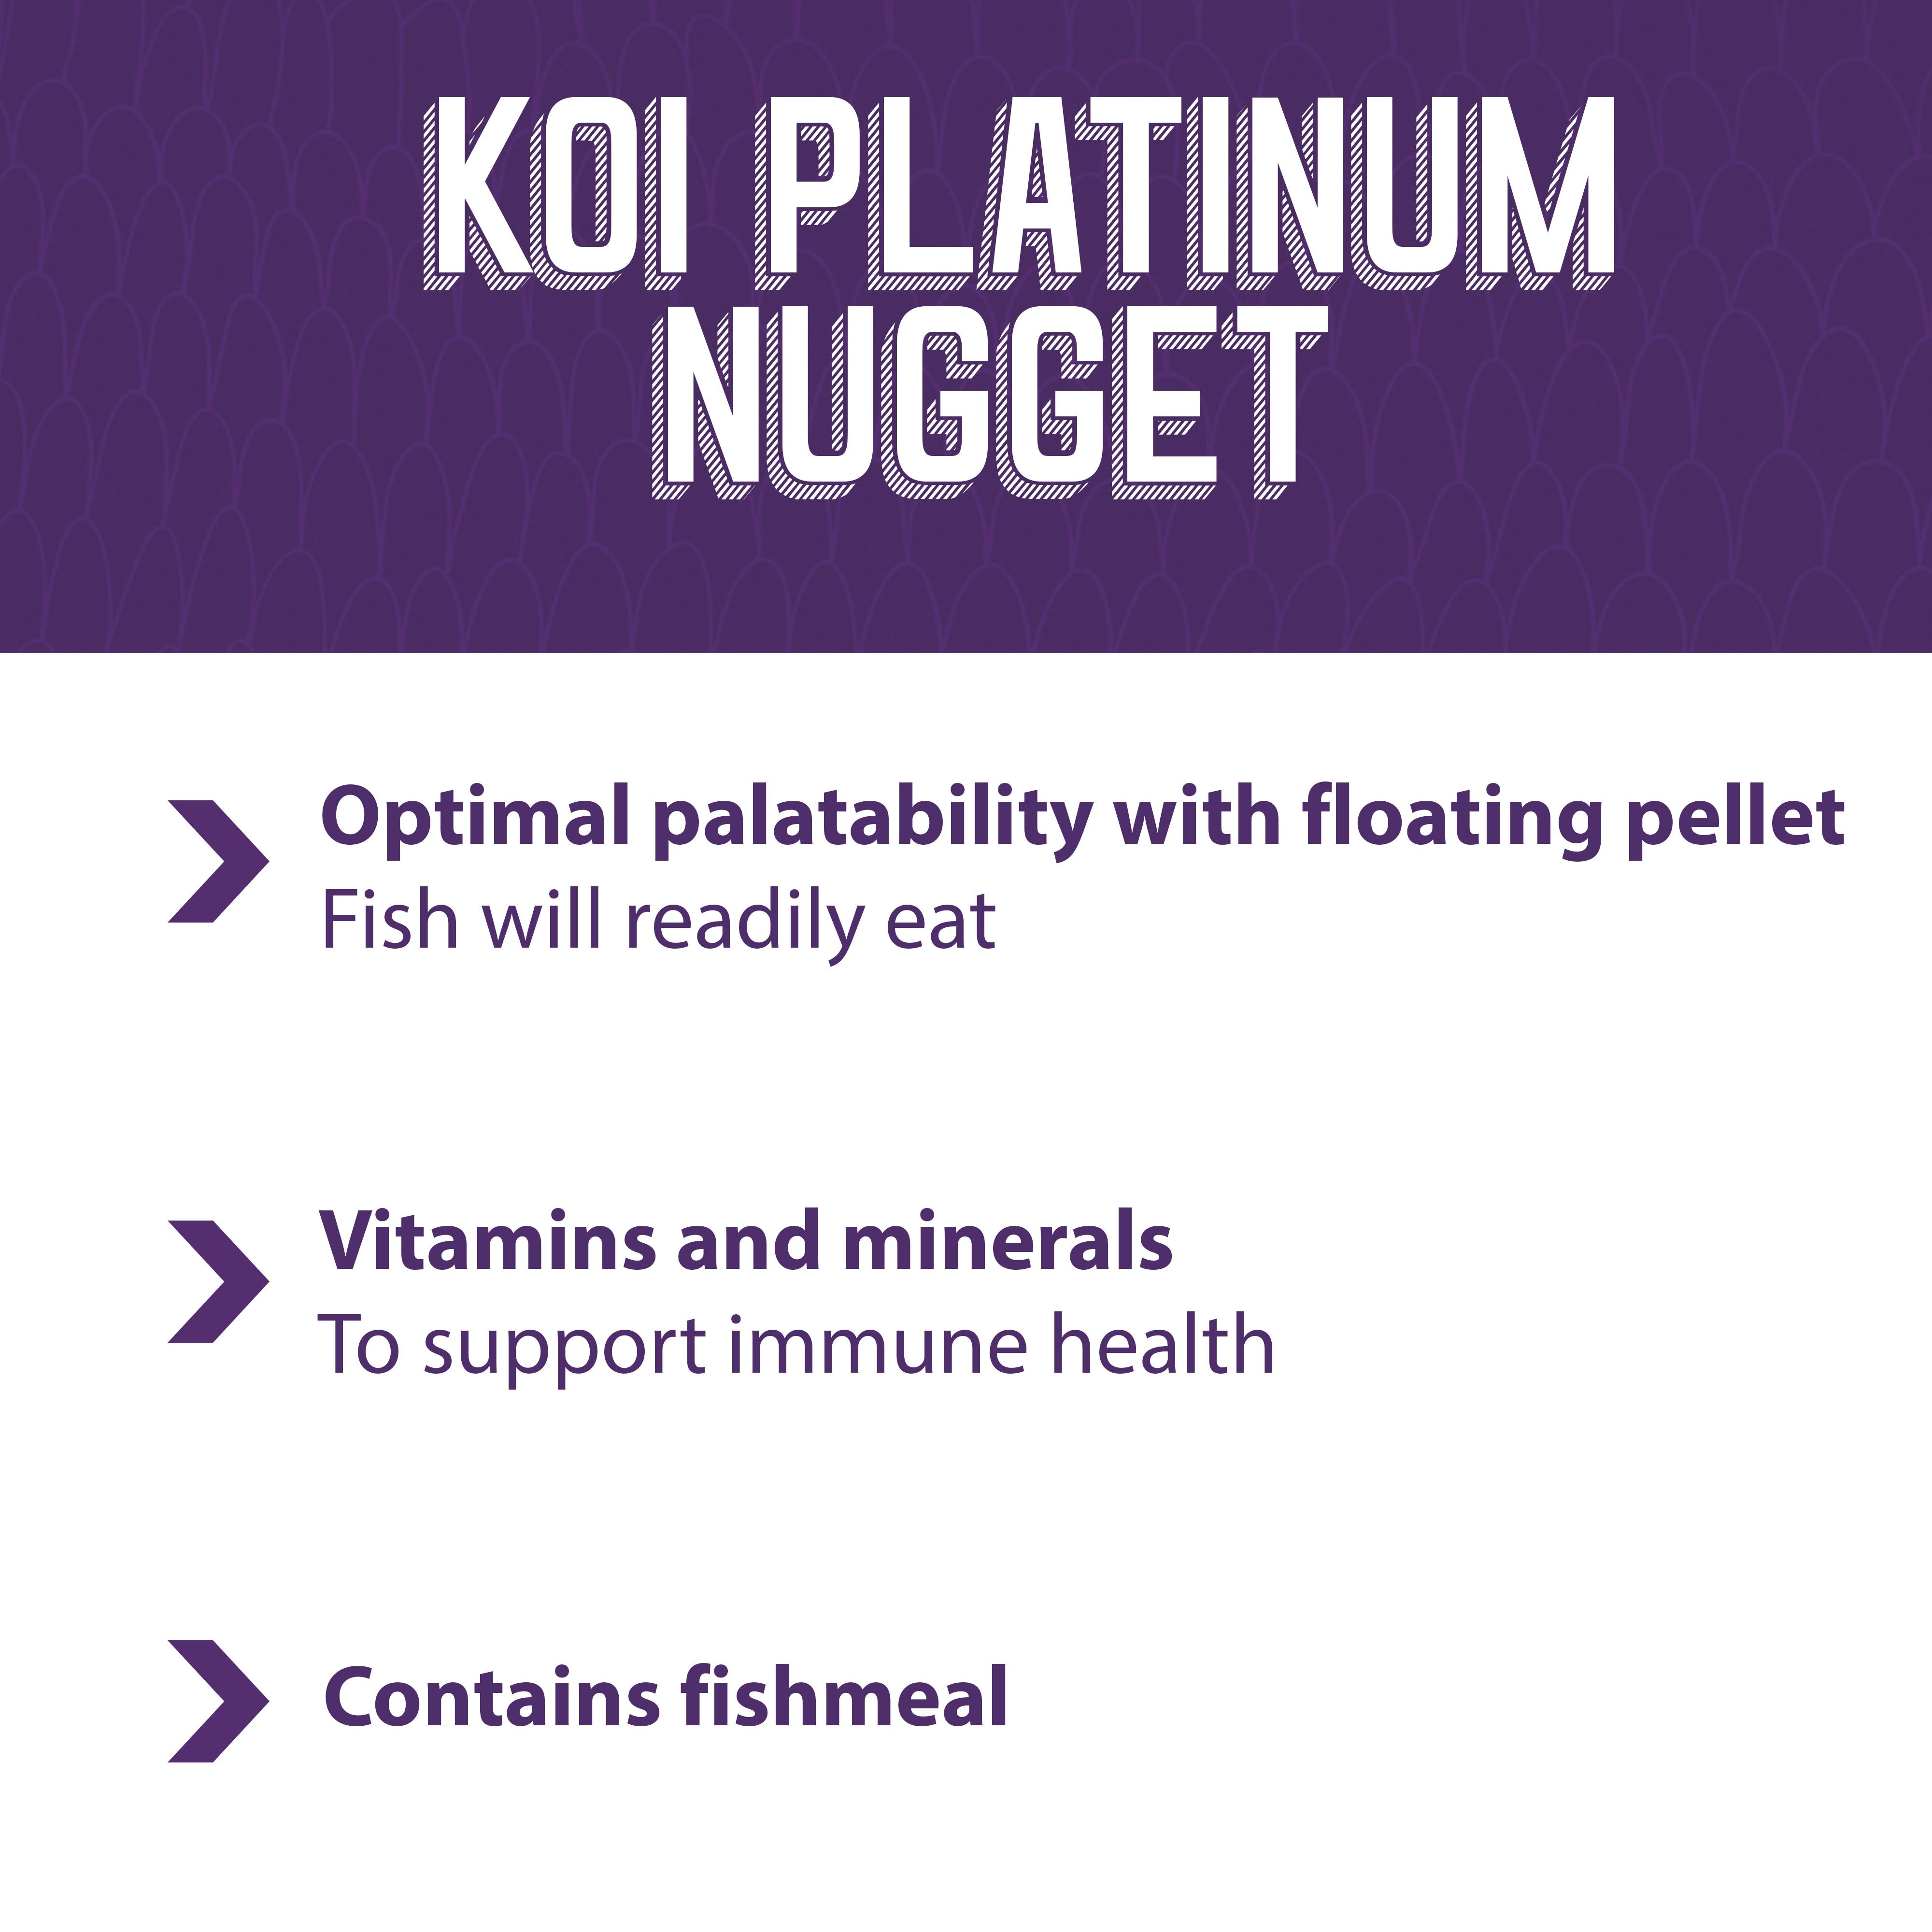 Koi Platinum nugget contain fishmeal